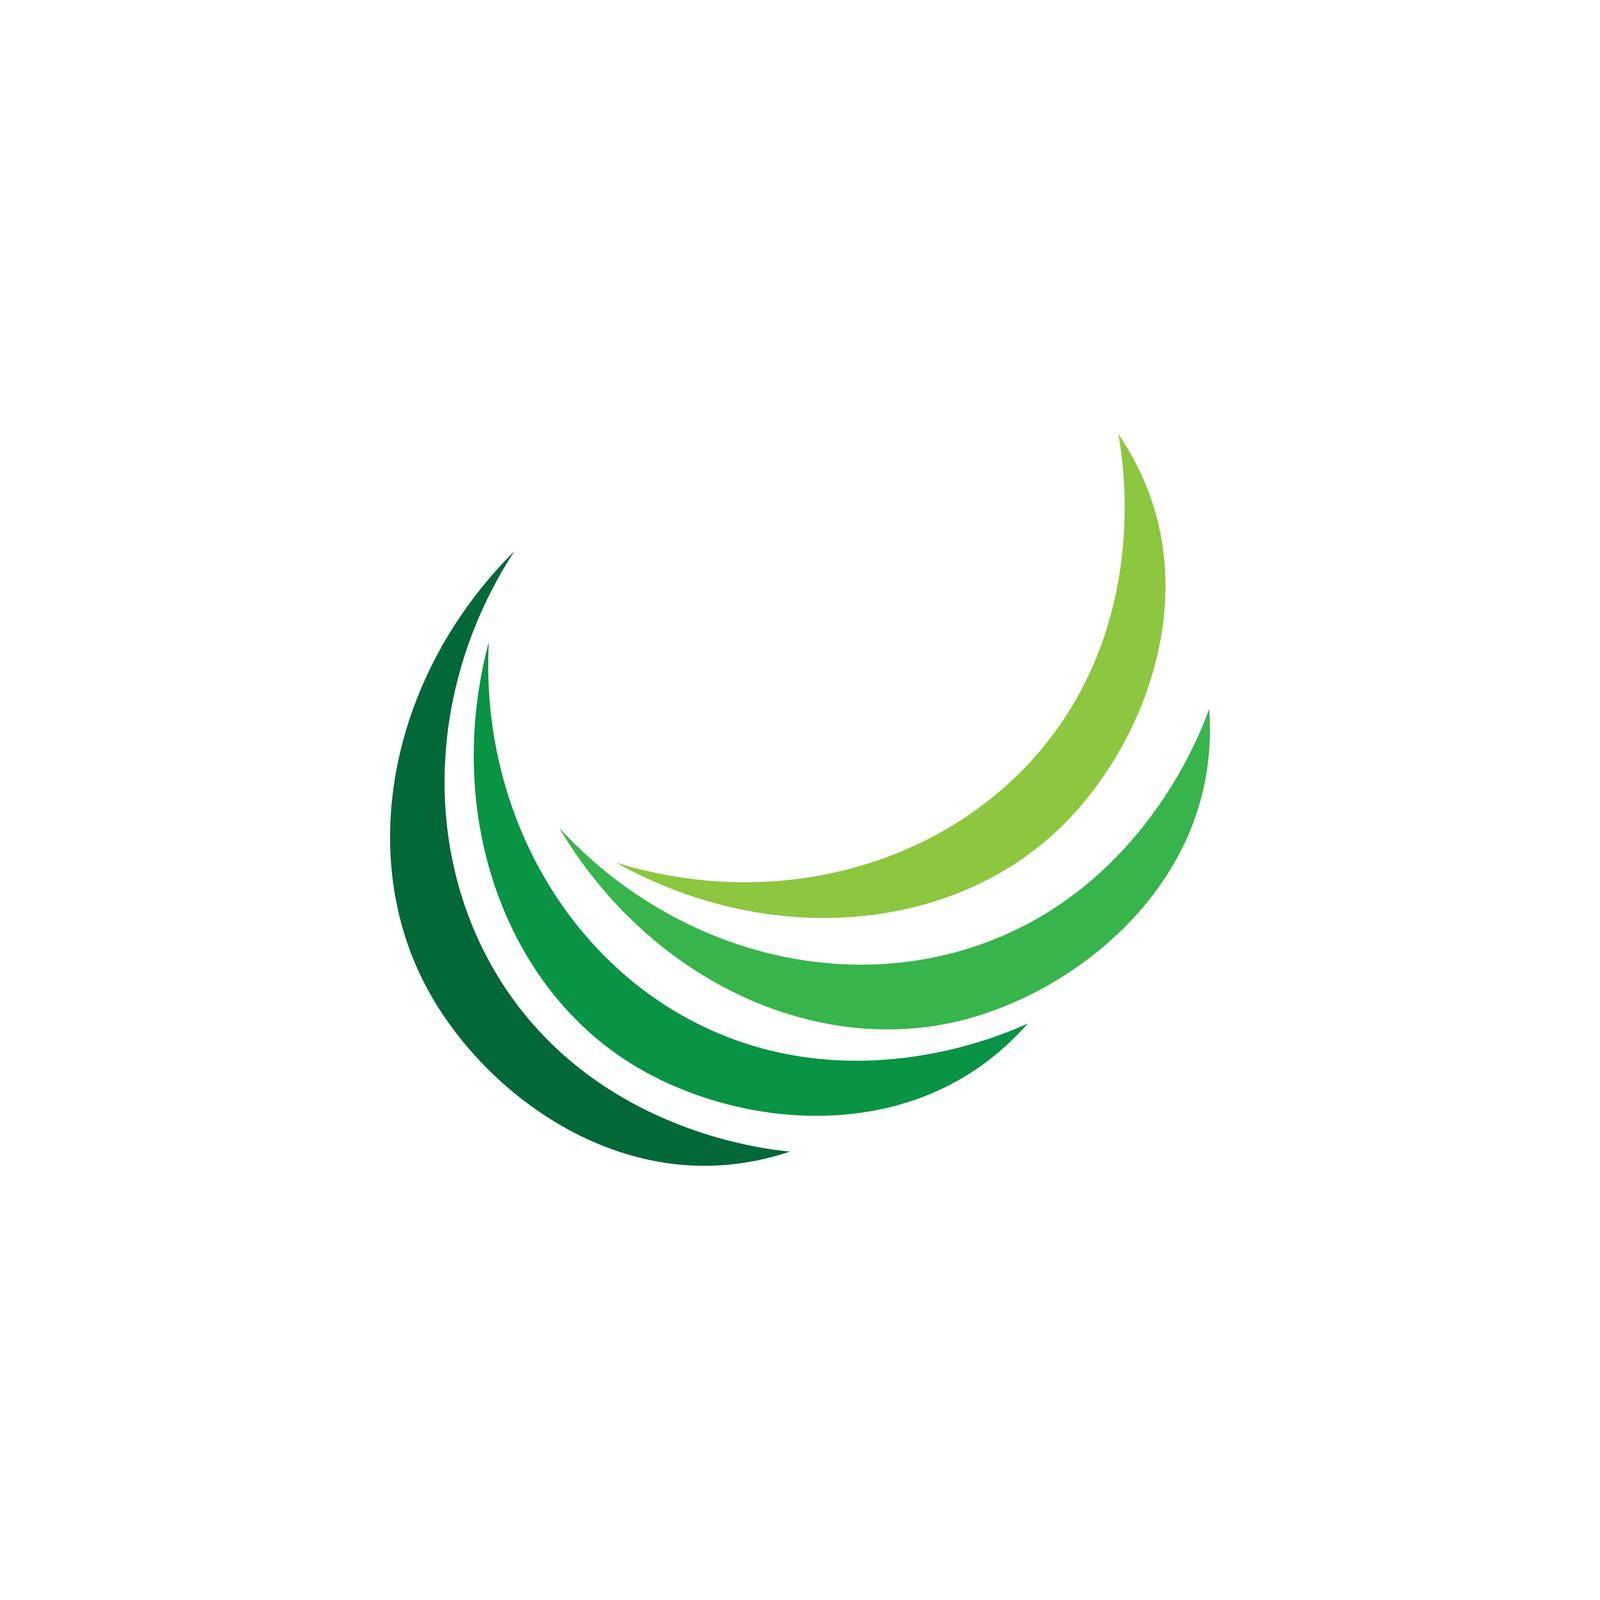 Wind icon logo free vector 